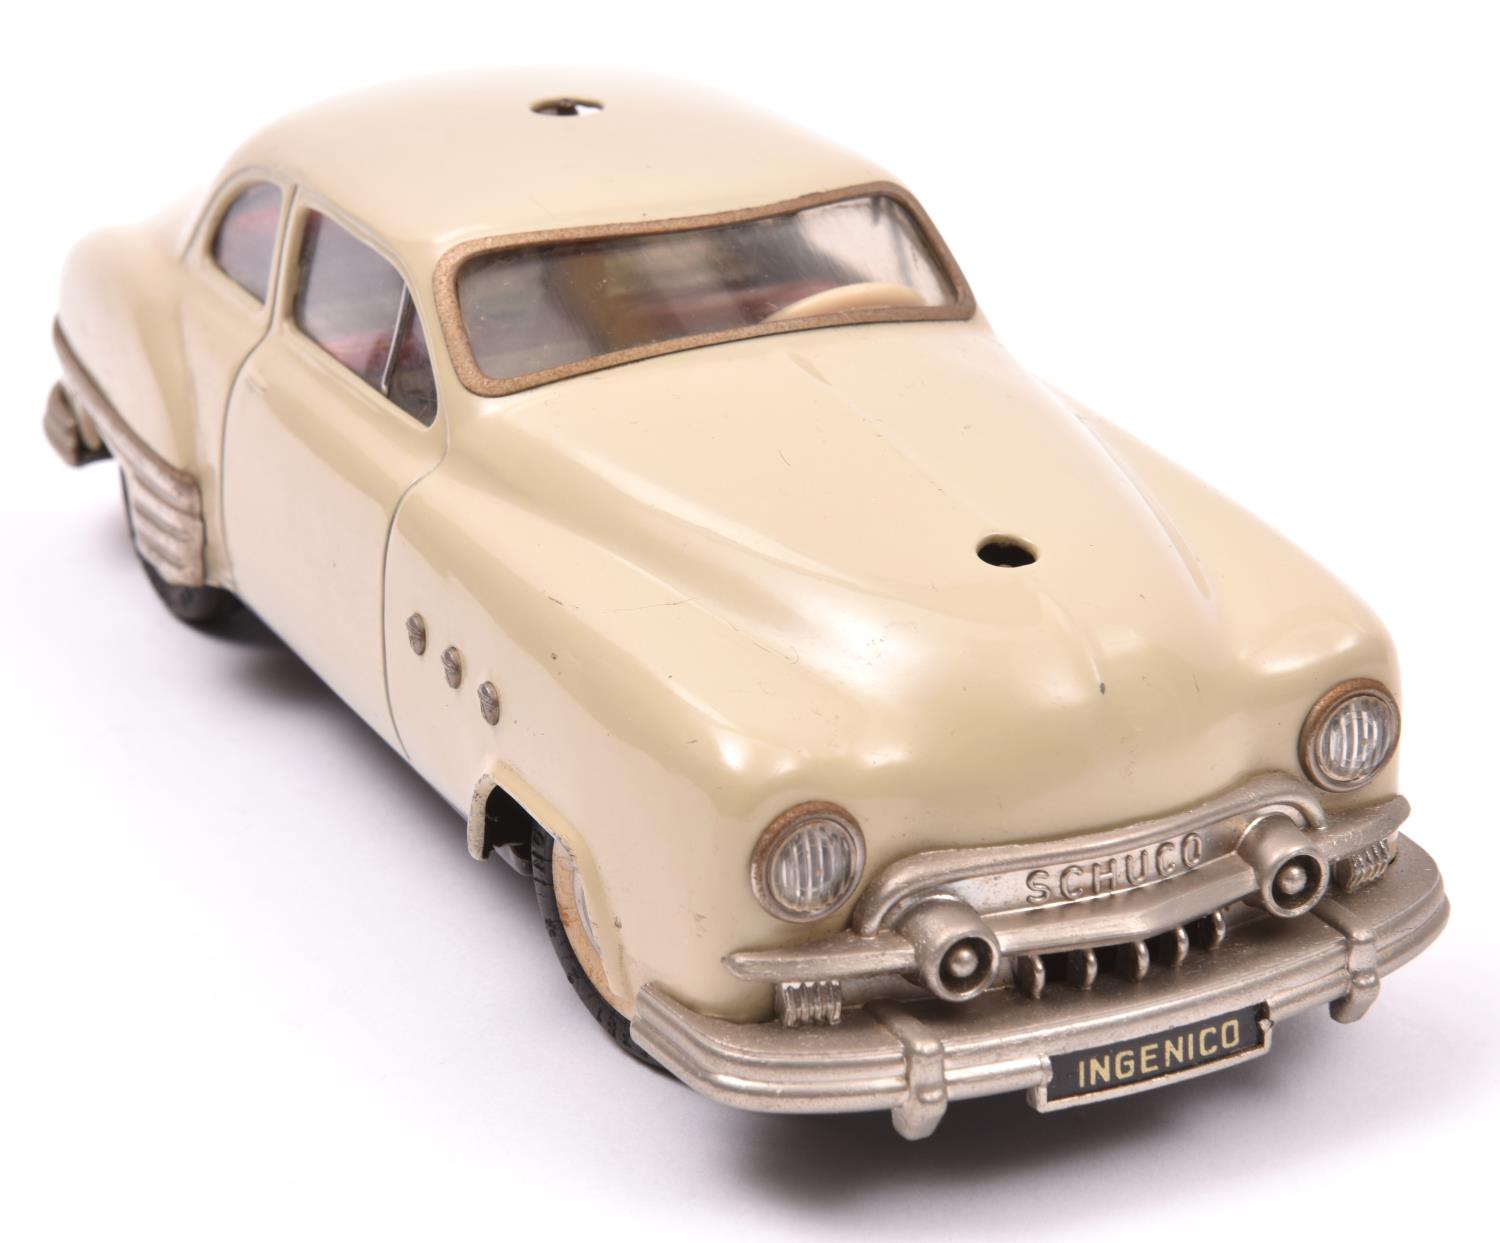 Schuco - Patient-Ingenico 5311 Tinplate 2 Door Saloon. A 1950's American style car in beige with a - Image 2 of 3